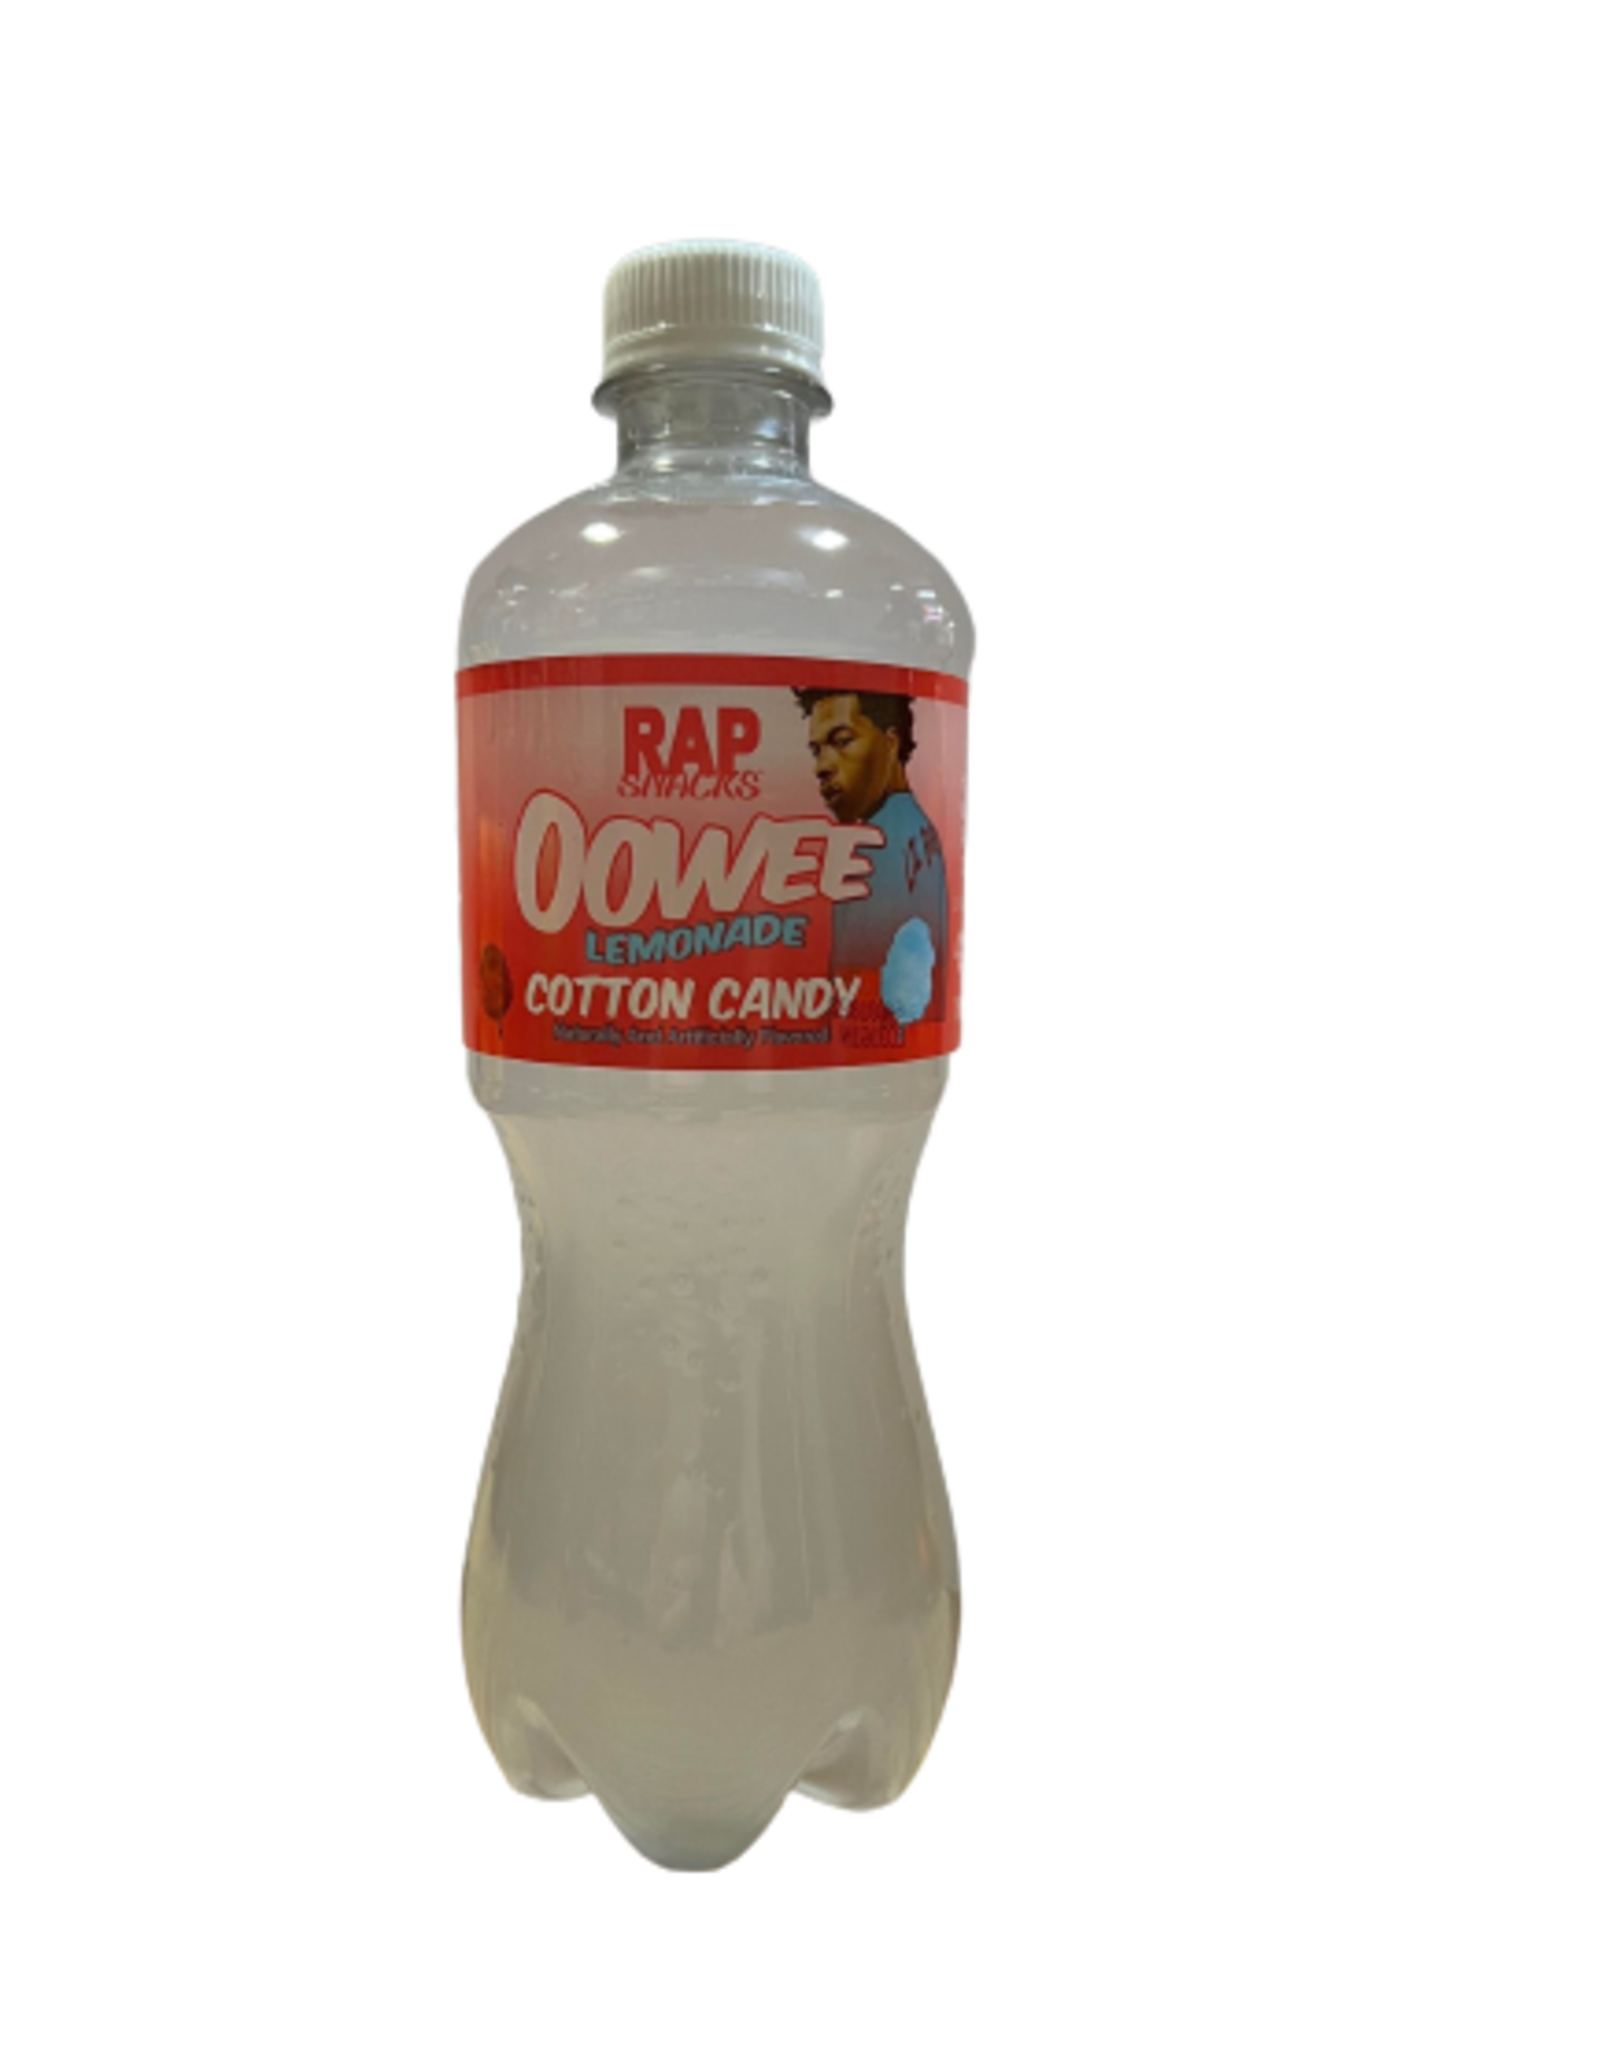 Oowee Lemonade Cotton Candy